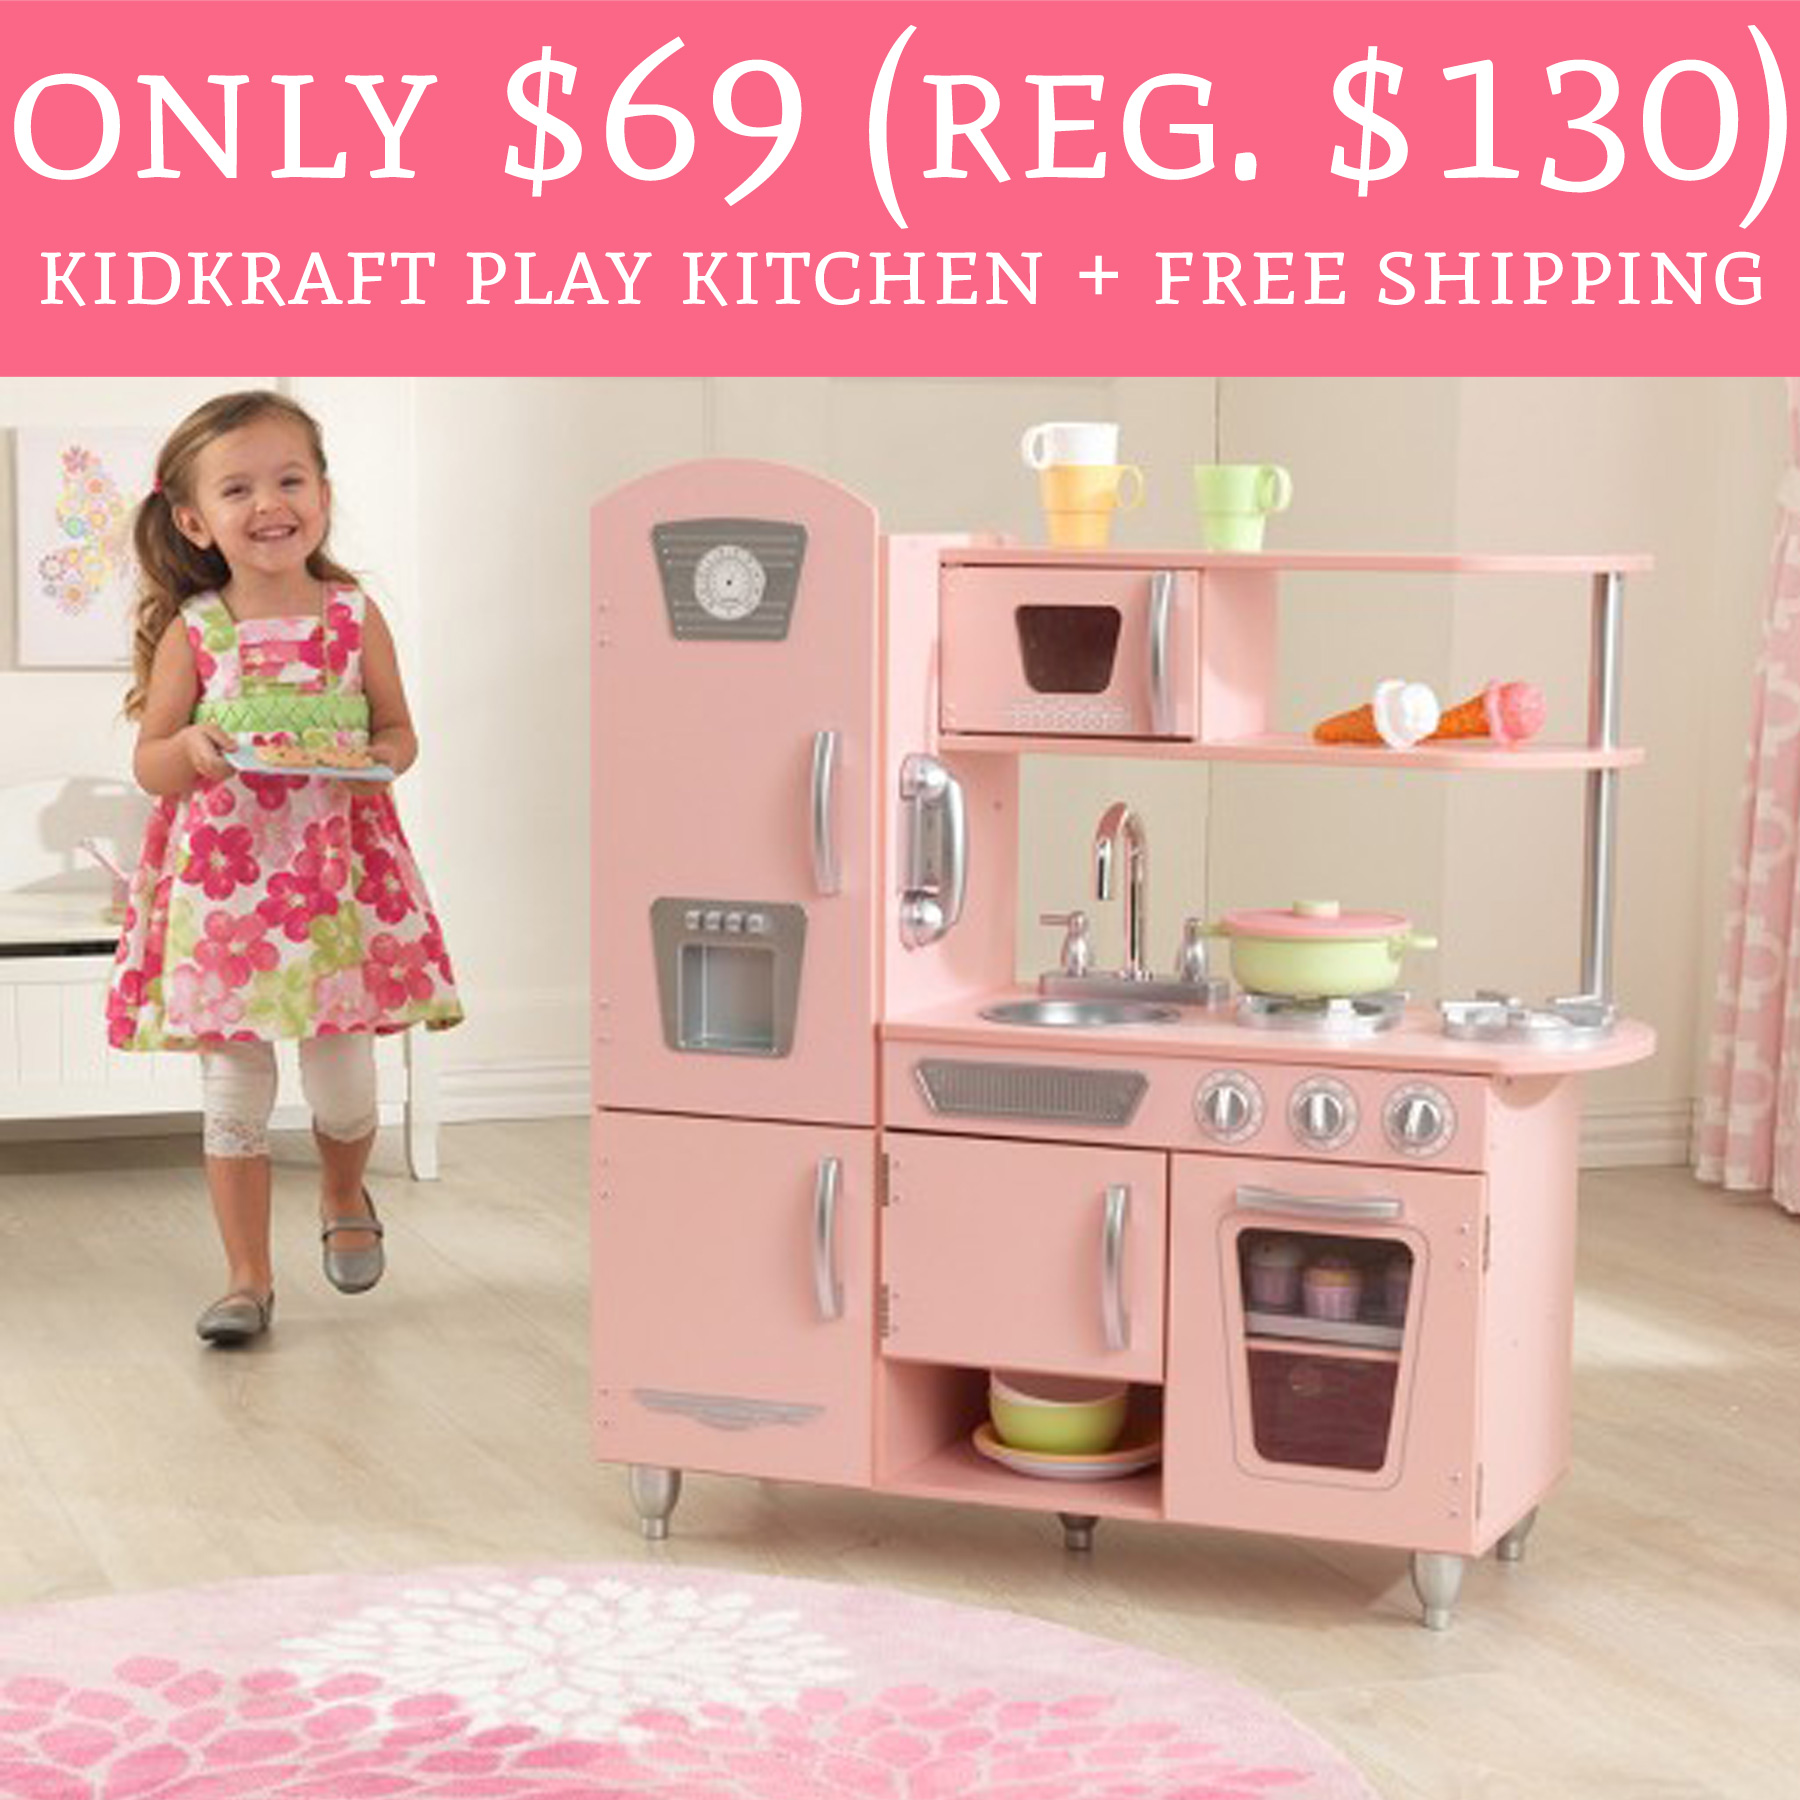 Only $69 (Regular $130) Kidkraft Play Kitchen + Free Shipping! - Deal